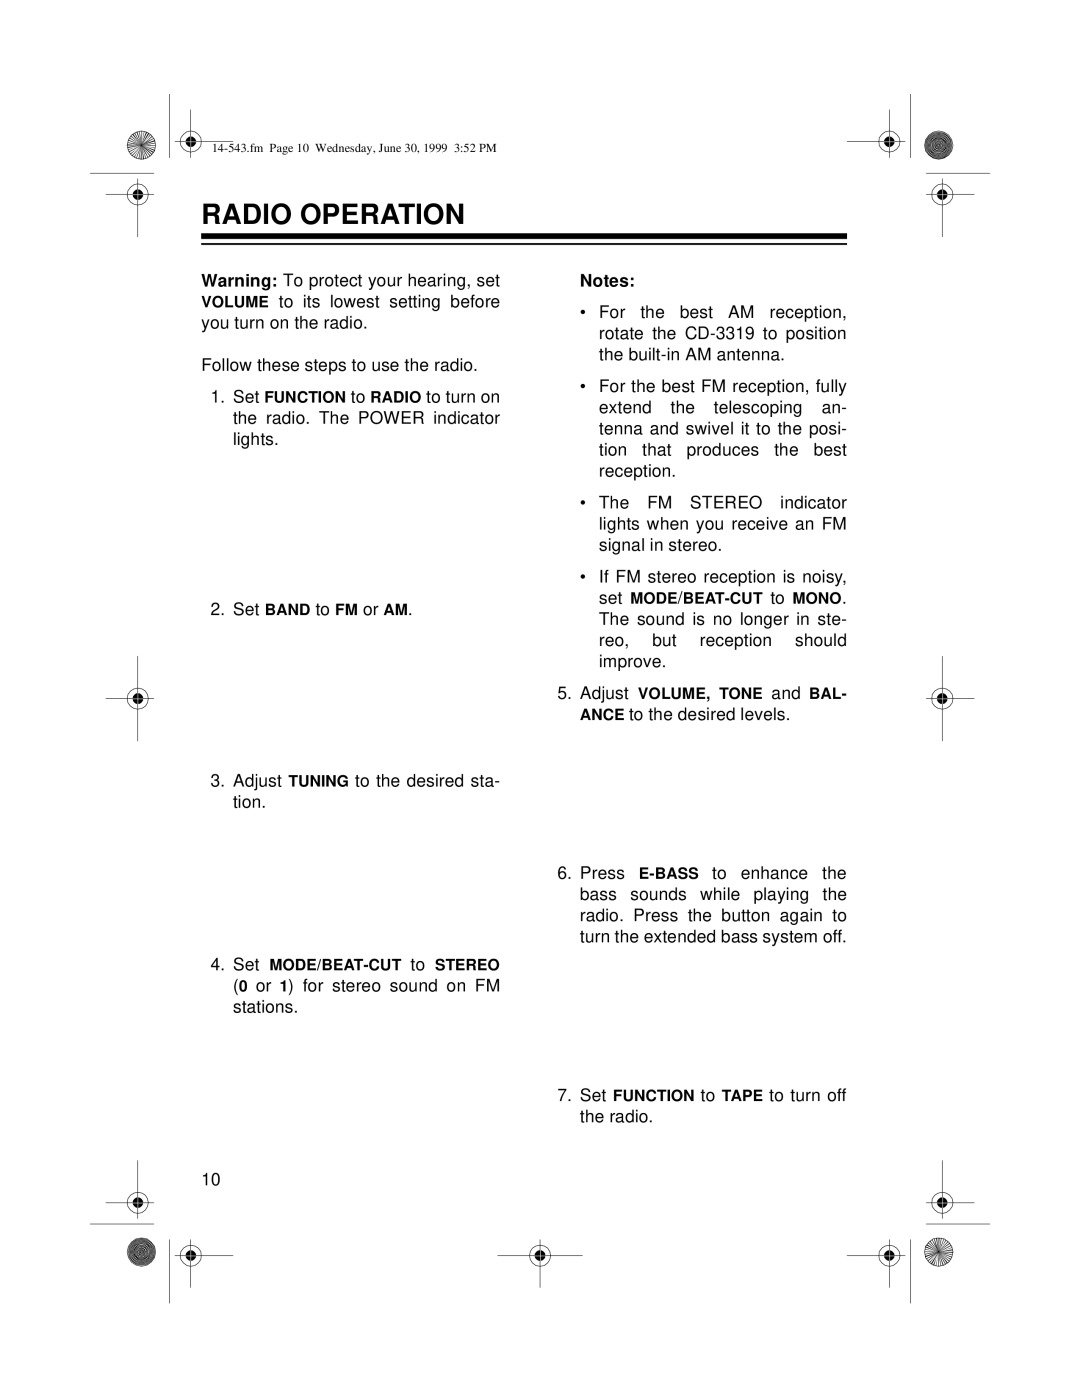 Radio Shack CD-3319 owner manual Radio Operation 